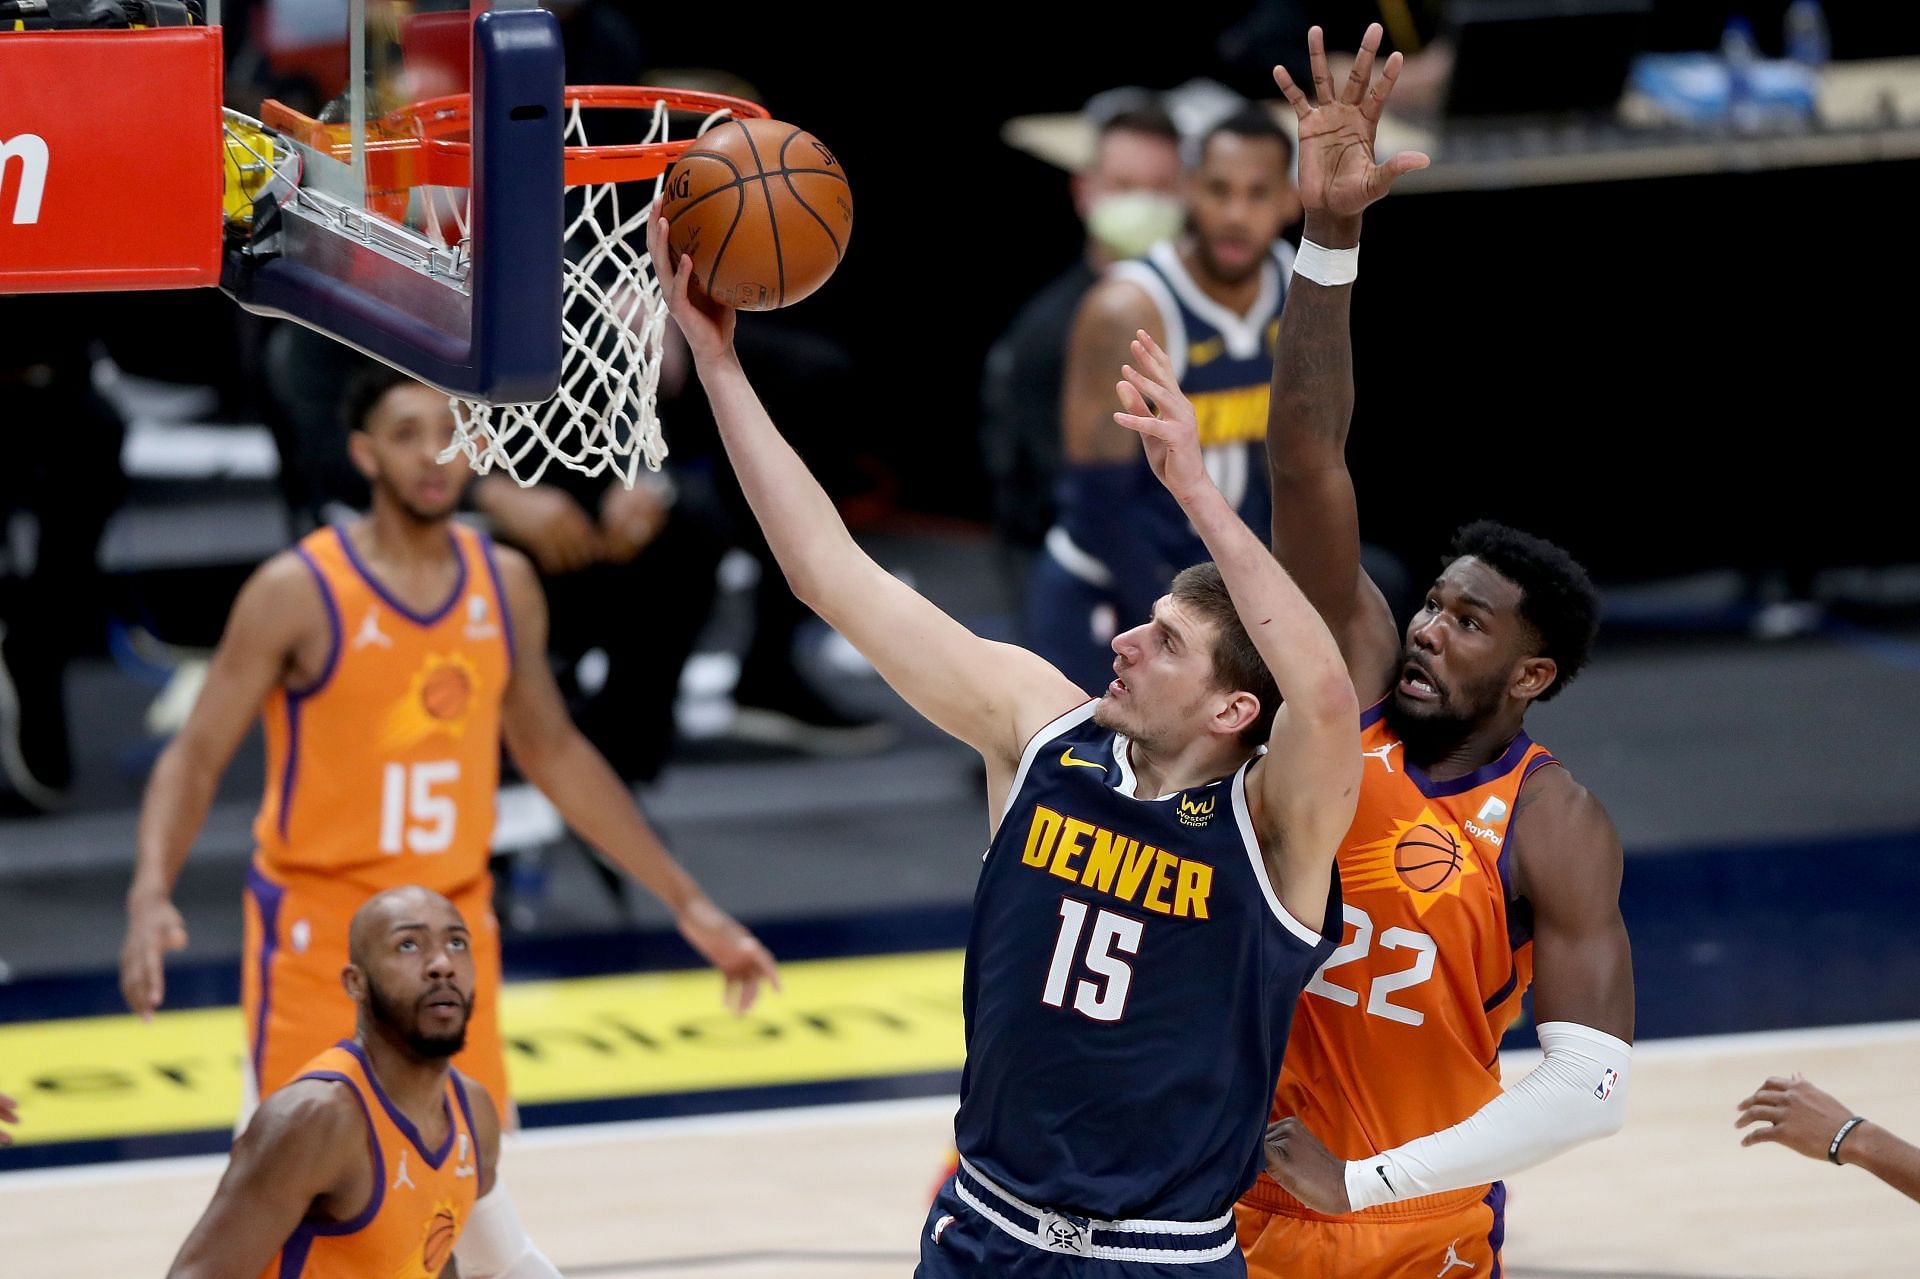 Nikola Jokic of the Denver Nuggets against Deandre Ayton of the Phoenix Suns in the 2021-22 NBA season